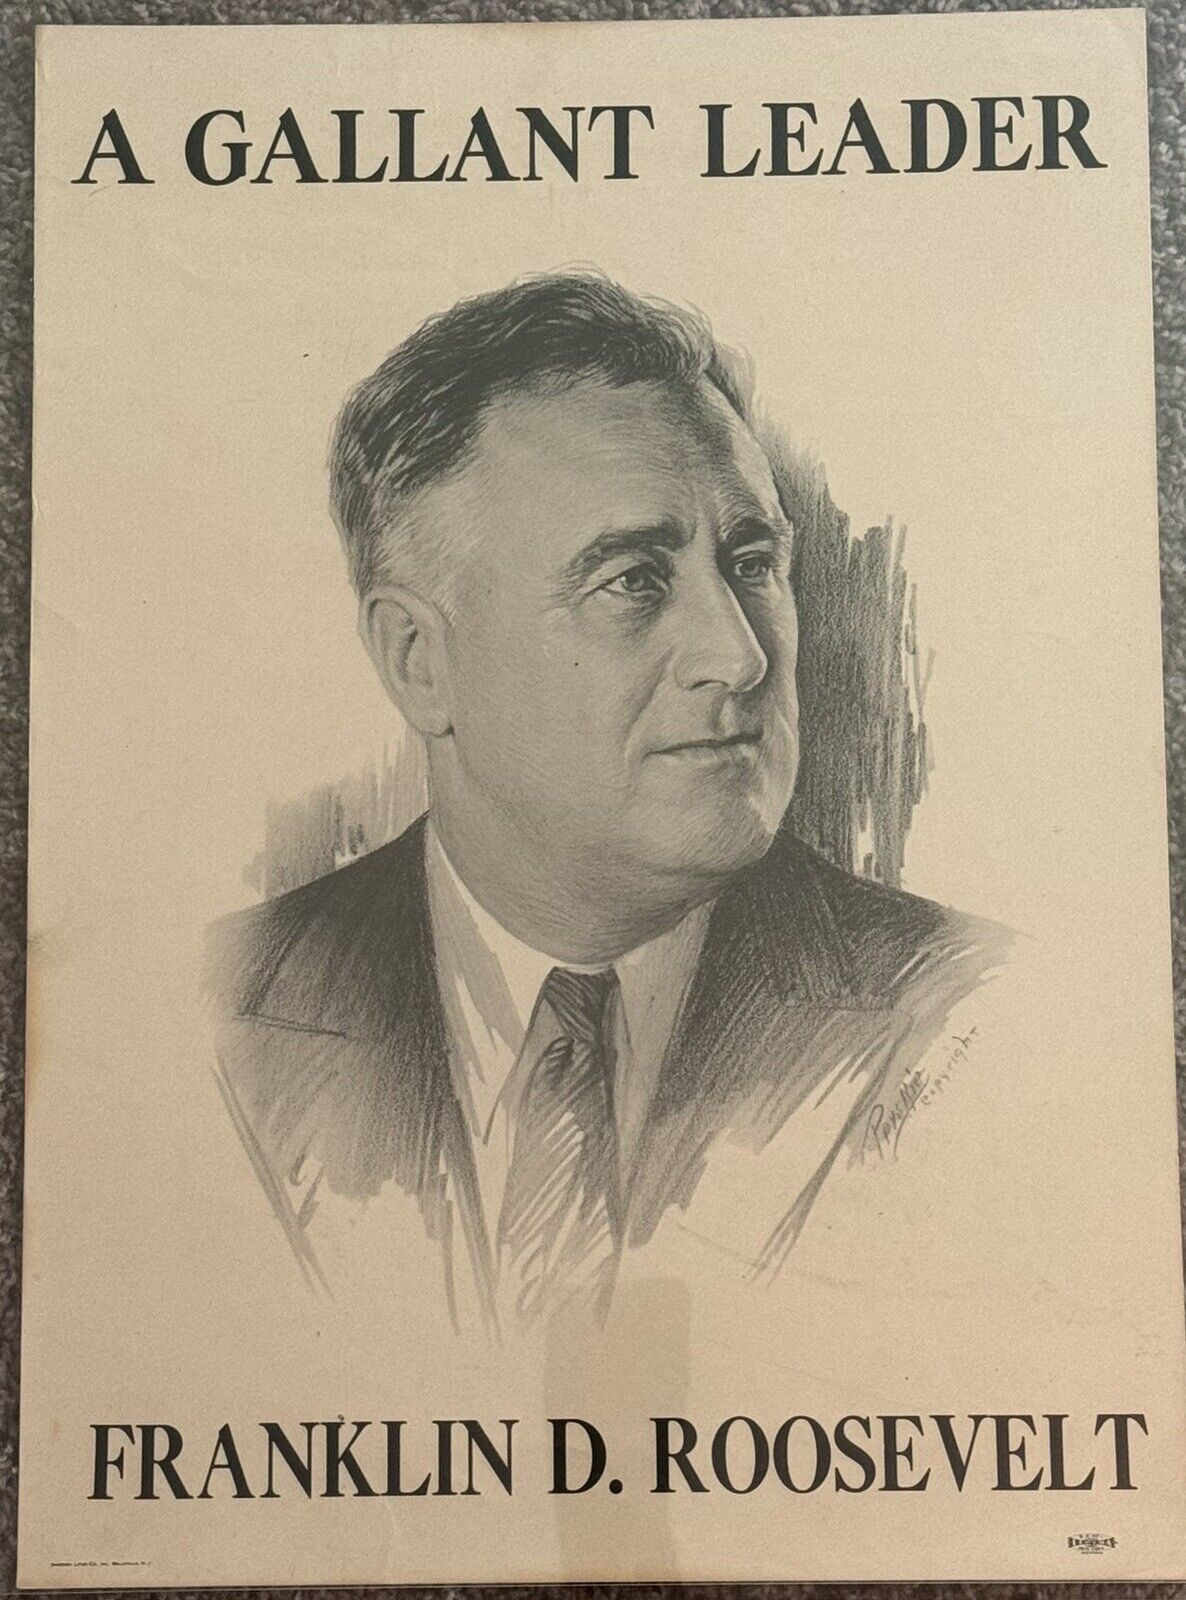 1936 FDR Roosevelt for President - A Gallant Leader 12 1/2” x 17 1/2” Poster